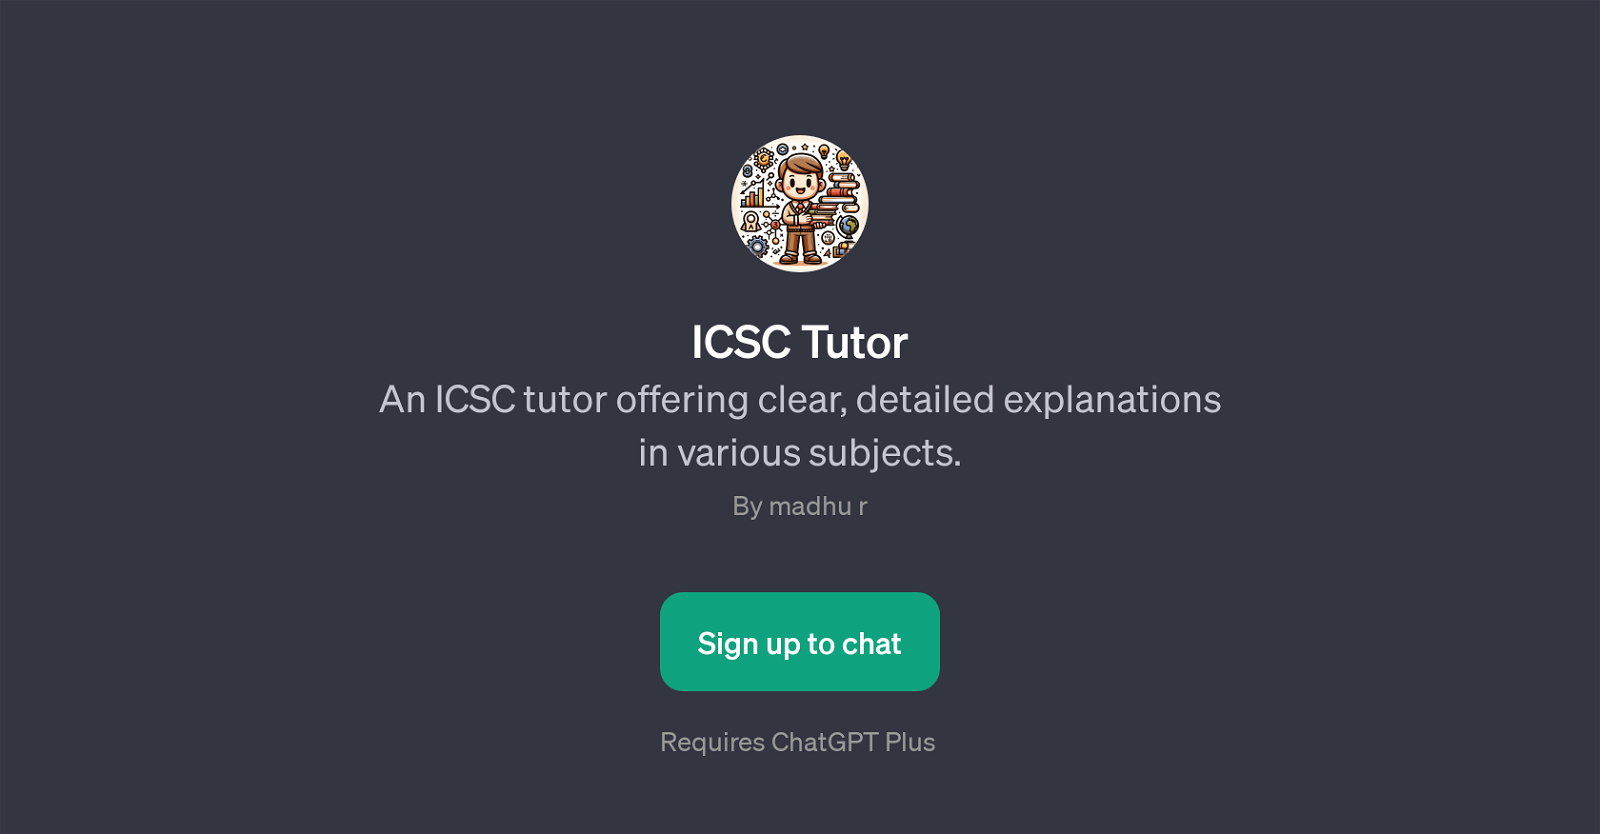 ICSC Tutor website